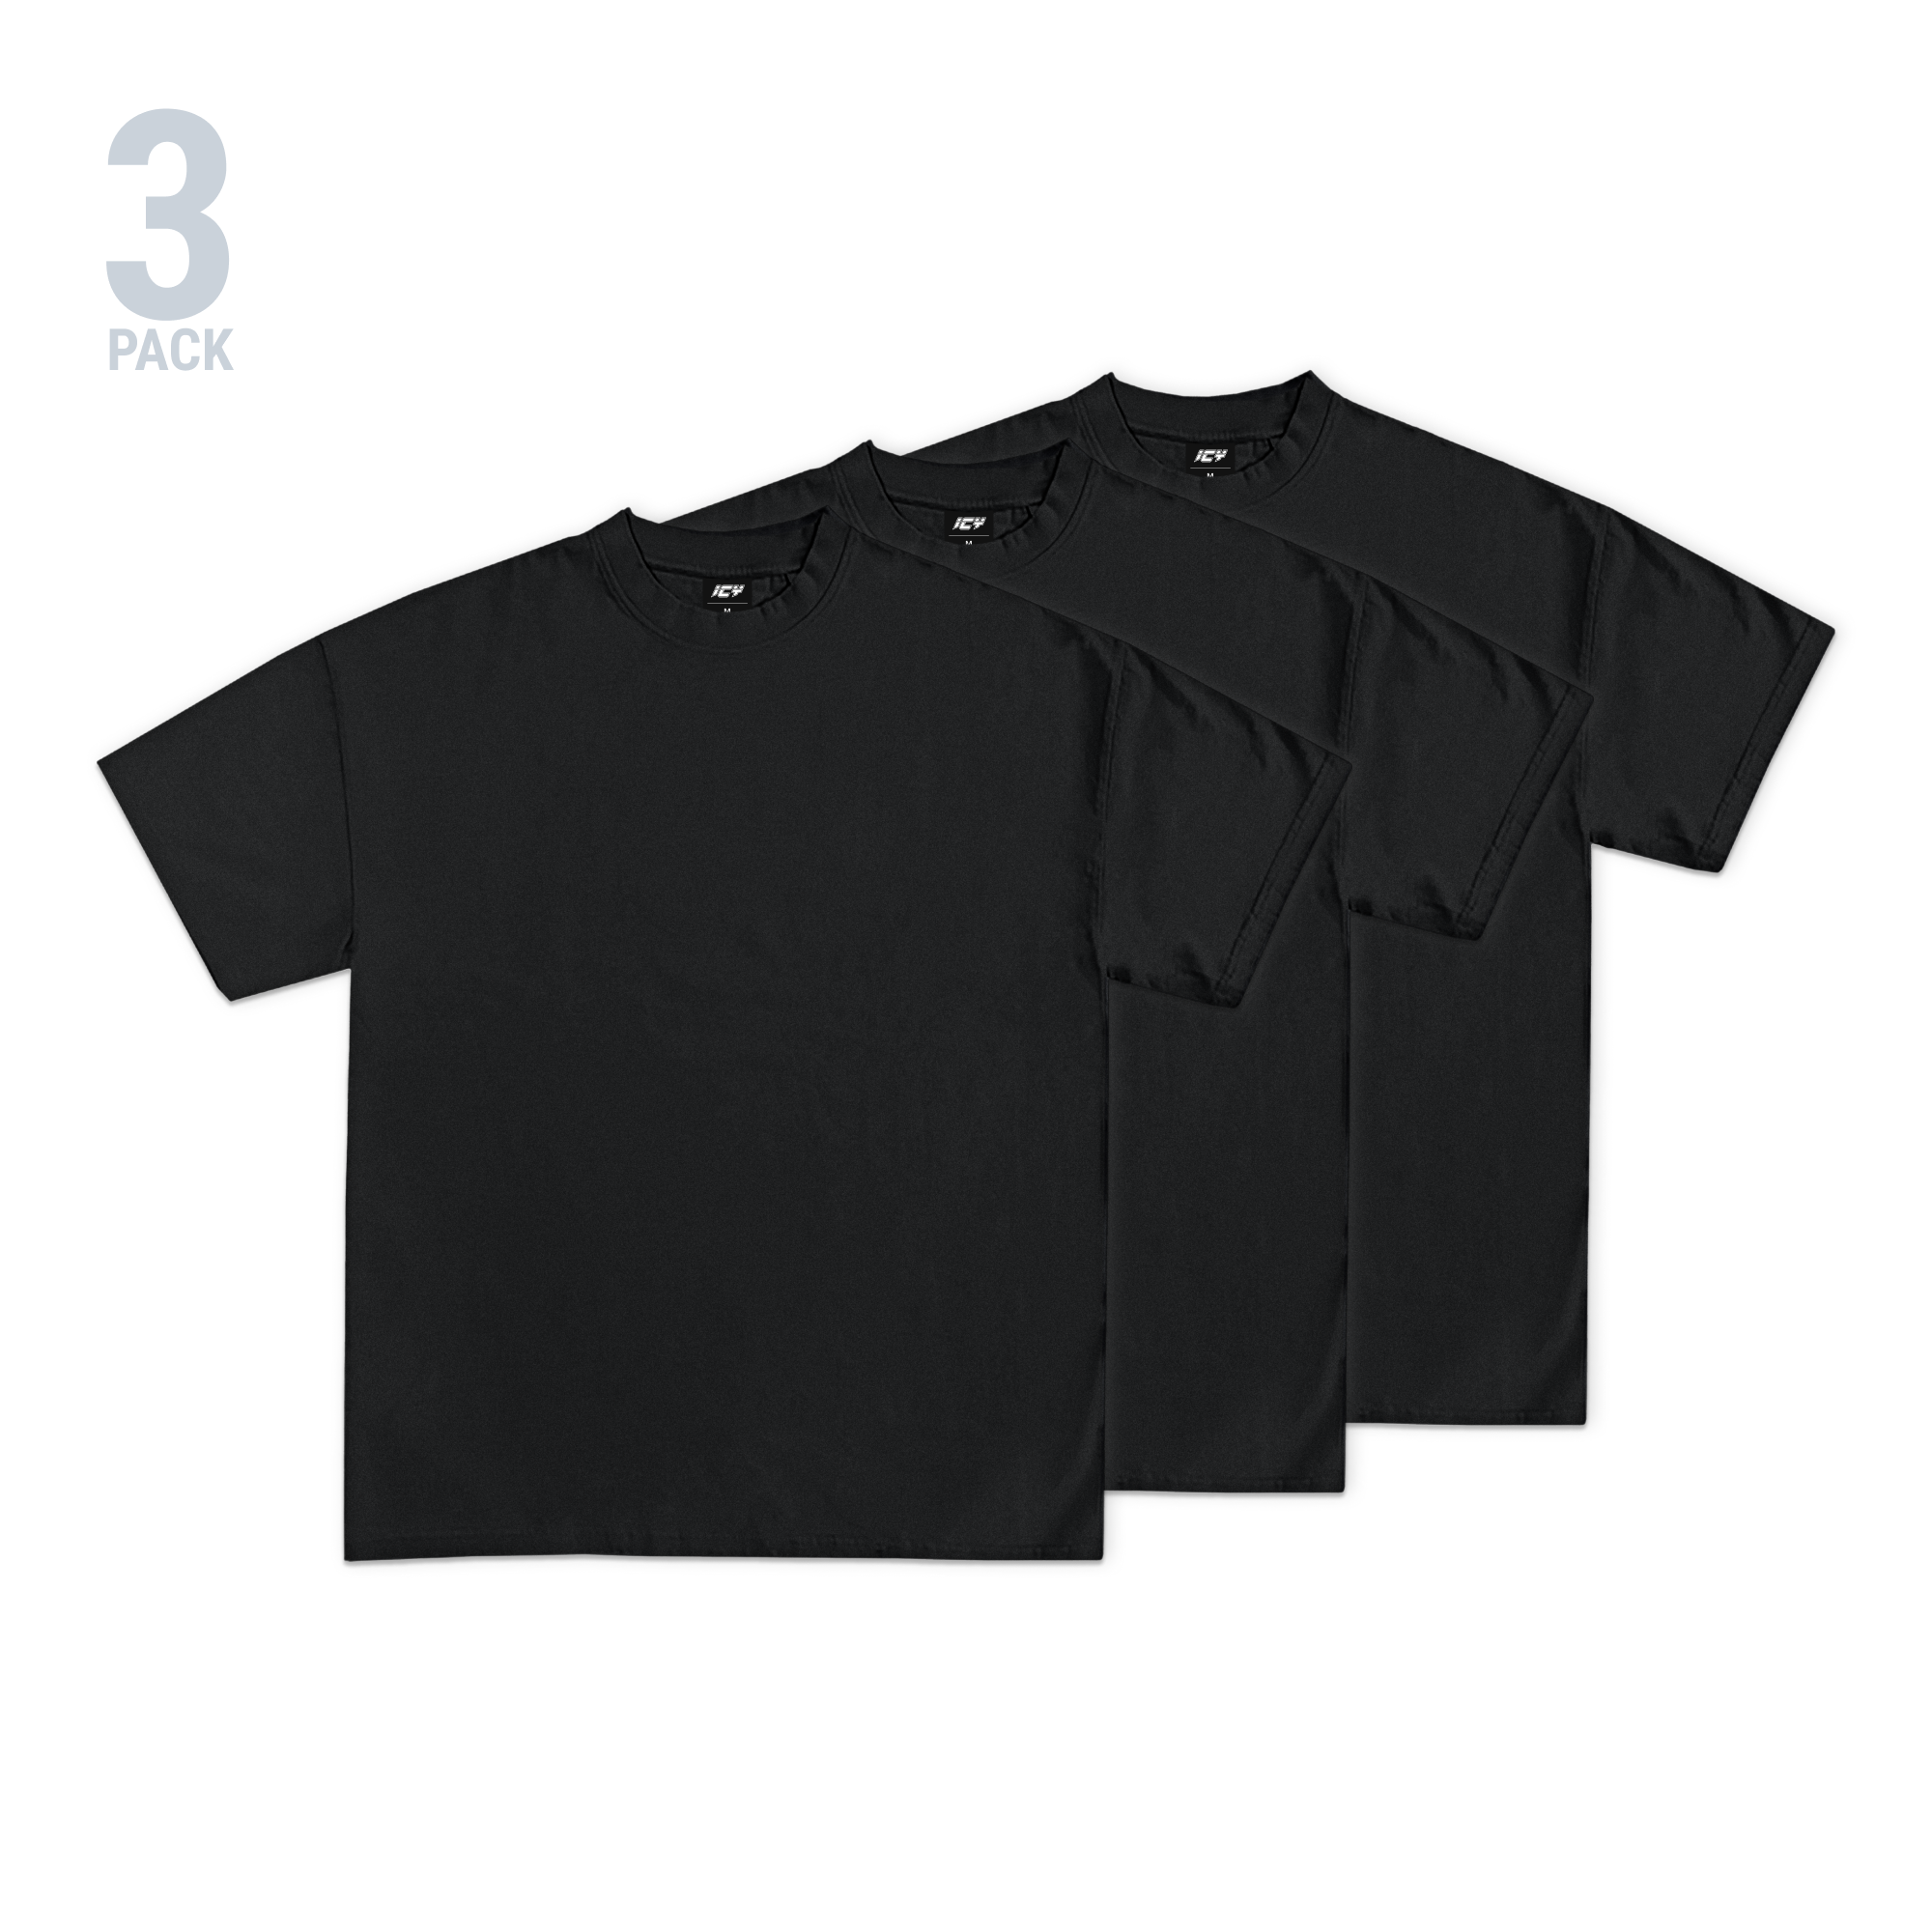 Icy Men's 3-Pack Heavyweight Blank T-Shirt (Black)